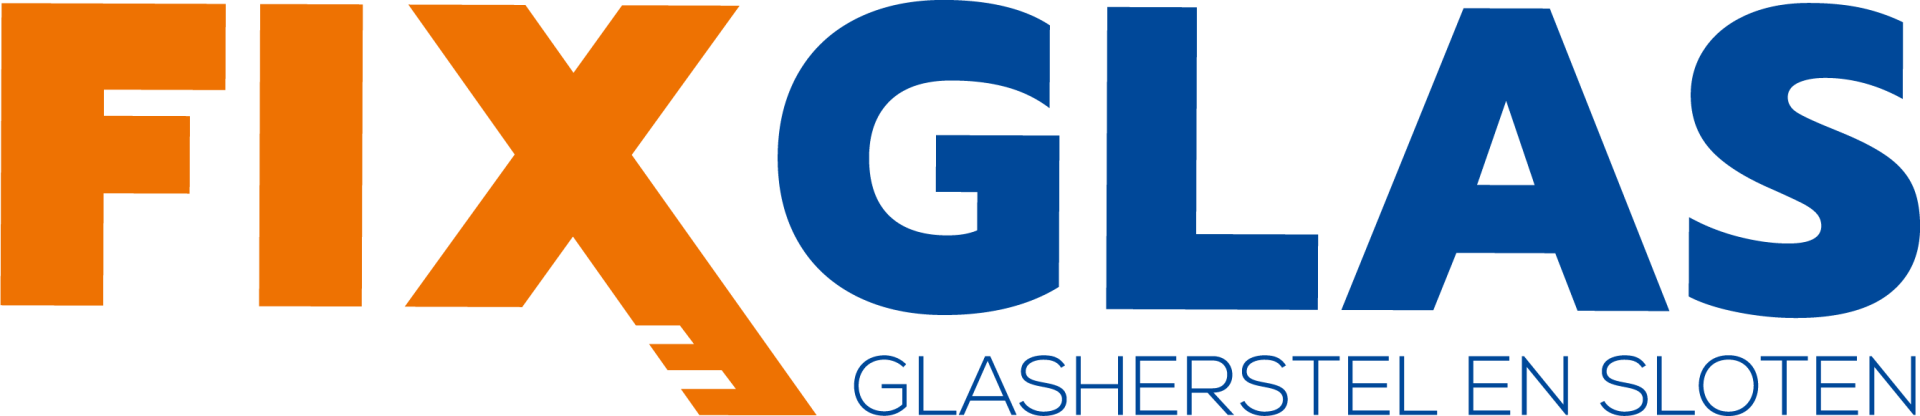 Fixglas-glaszetter-logo